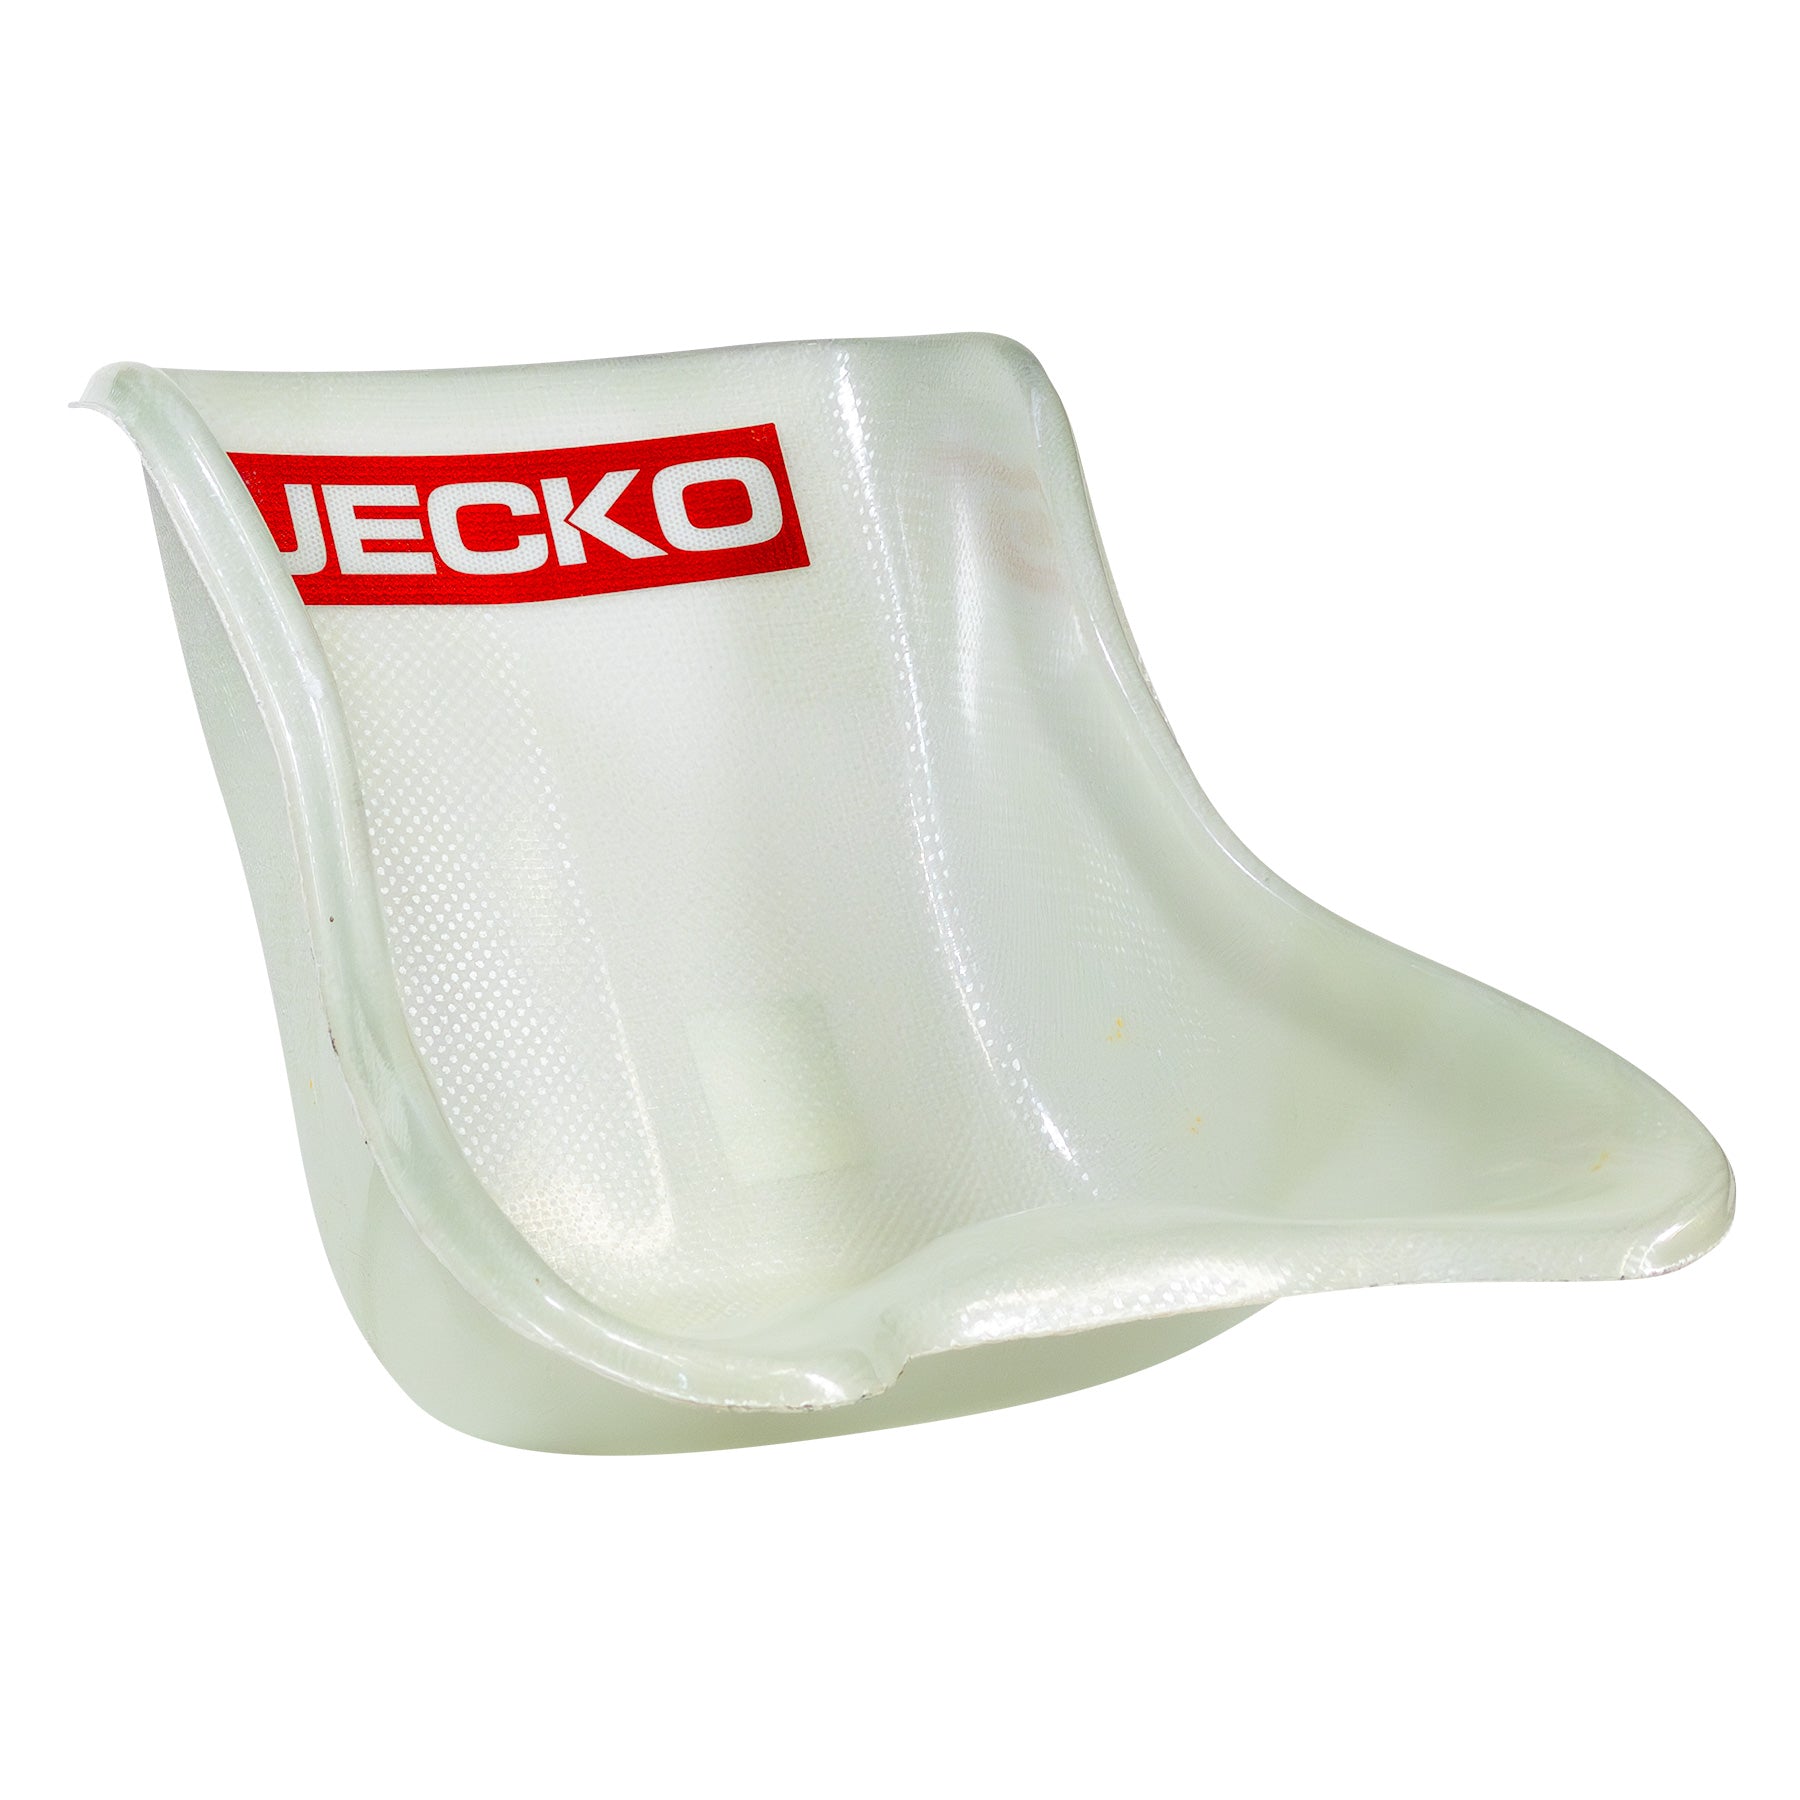 Jecko Racing Kart Seat - traditional shape